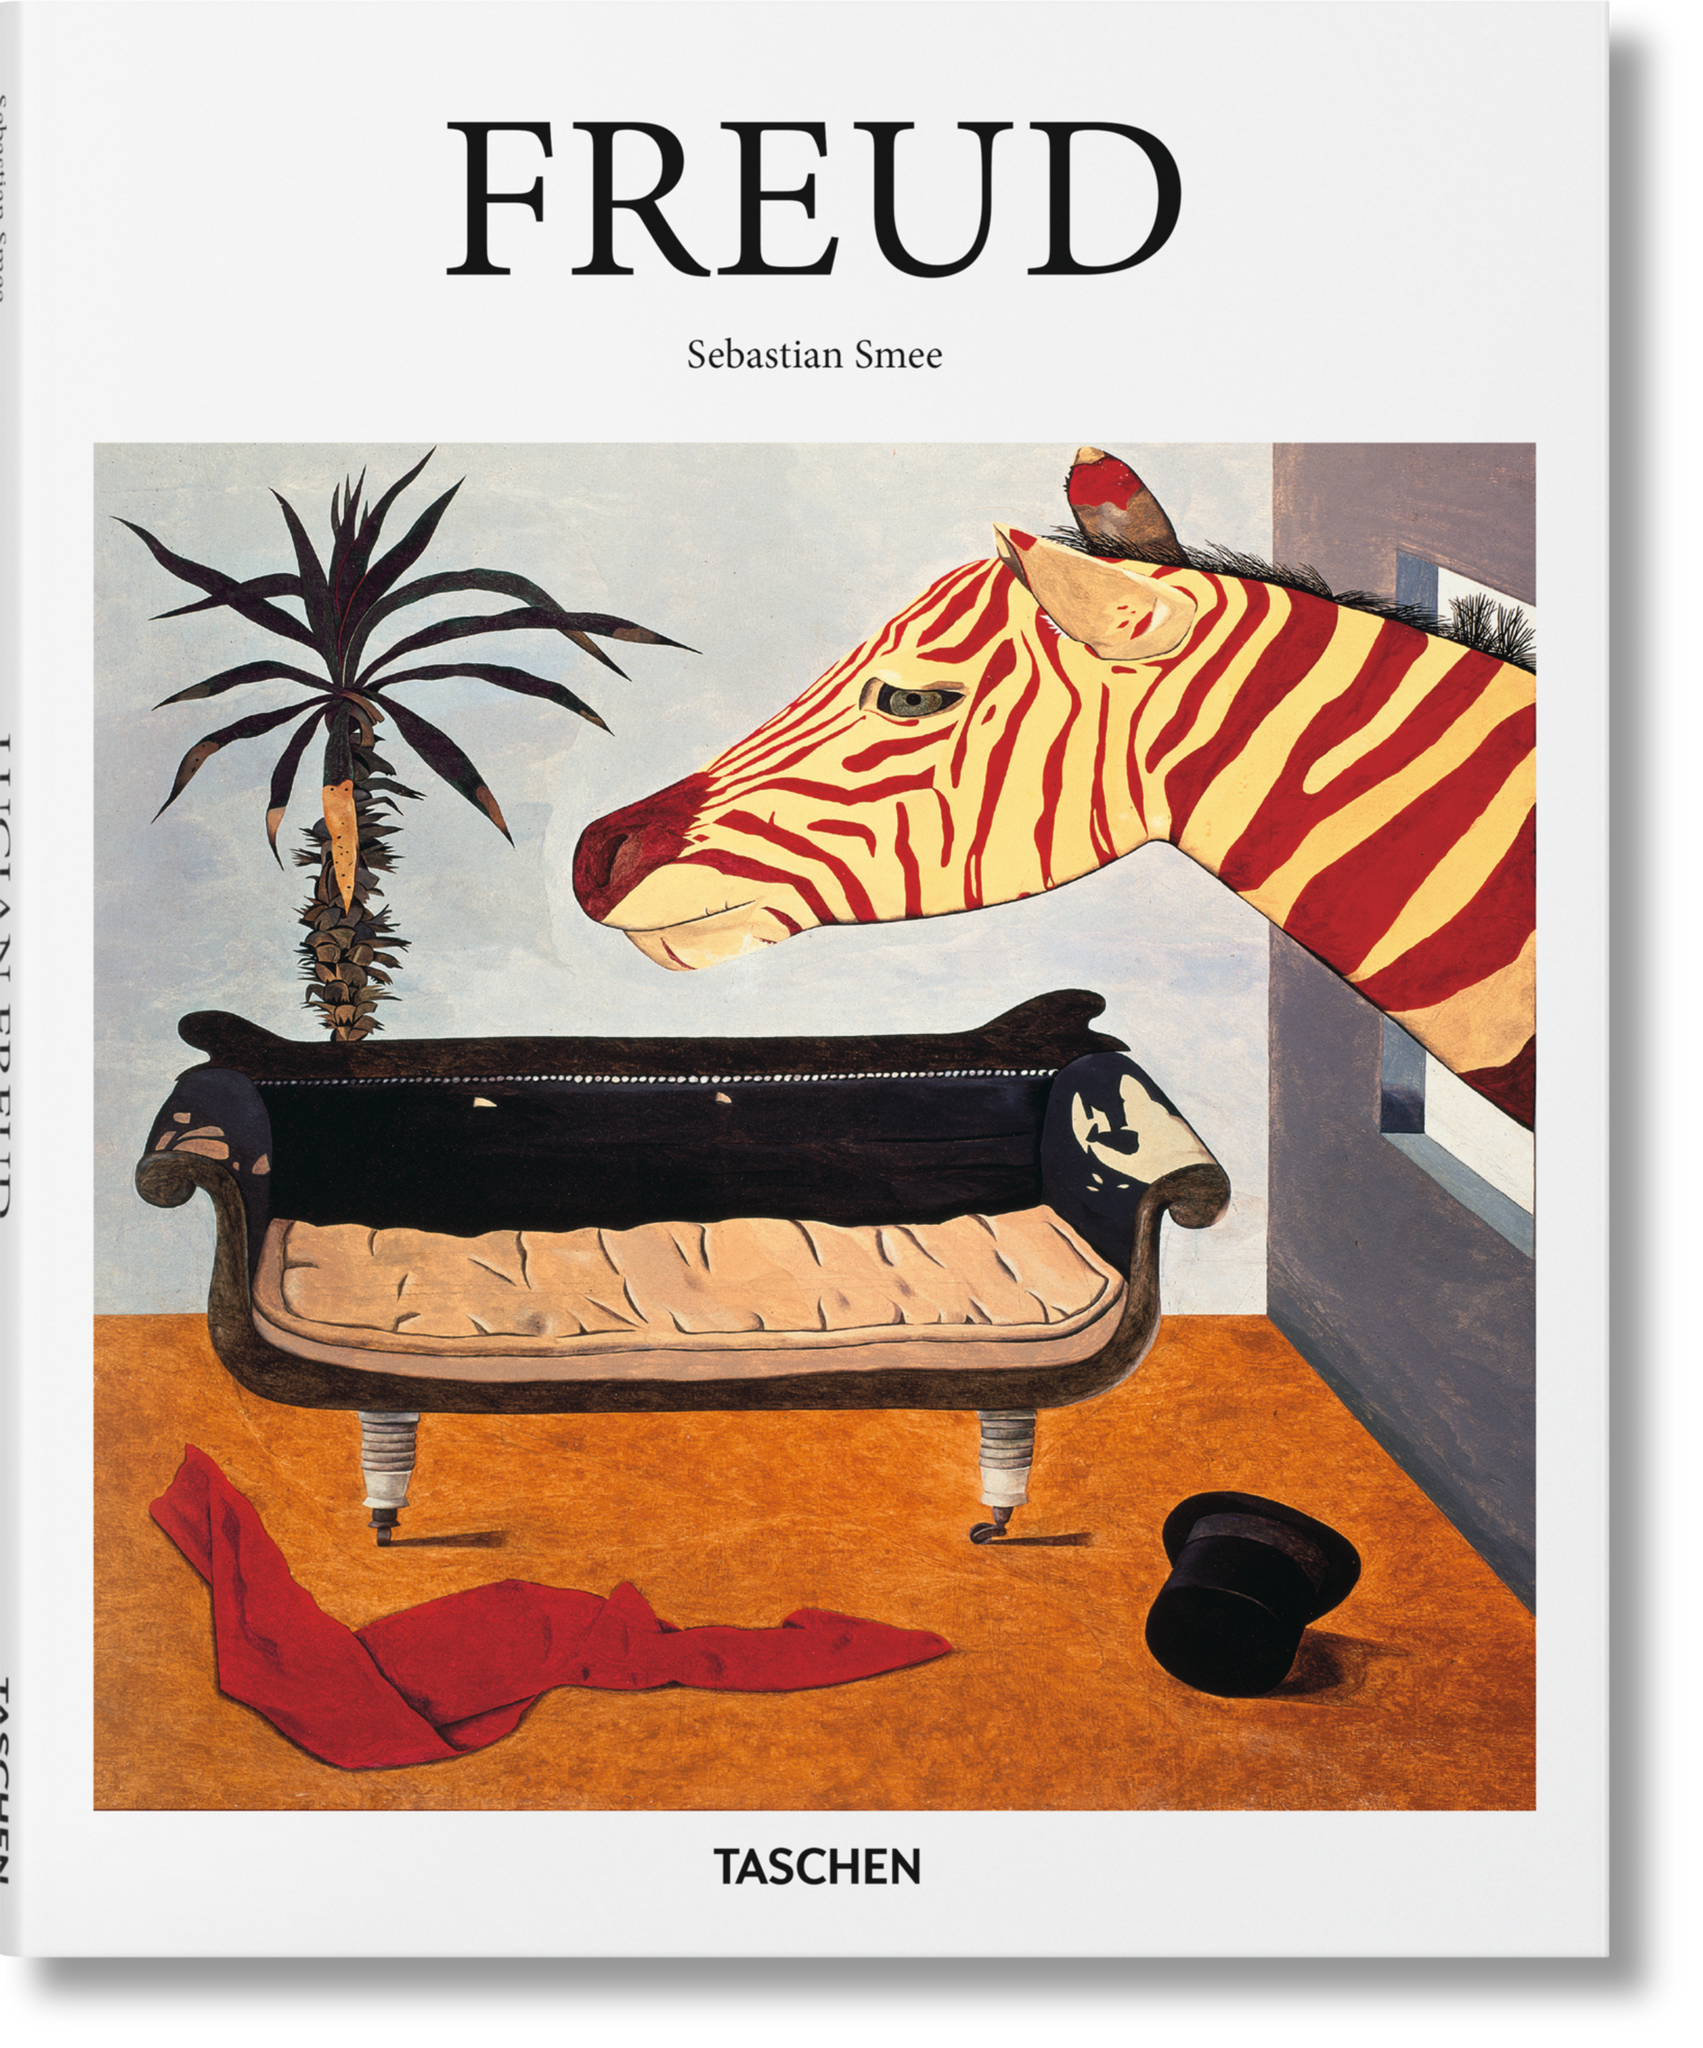 Freud by Sebastian Smee